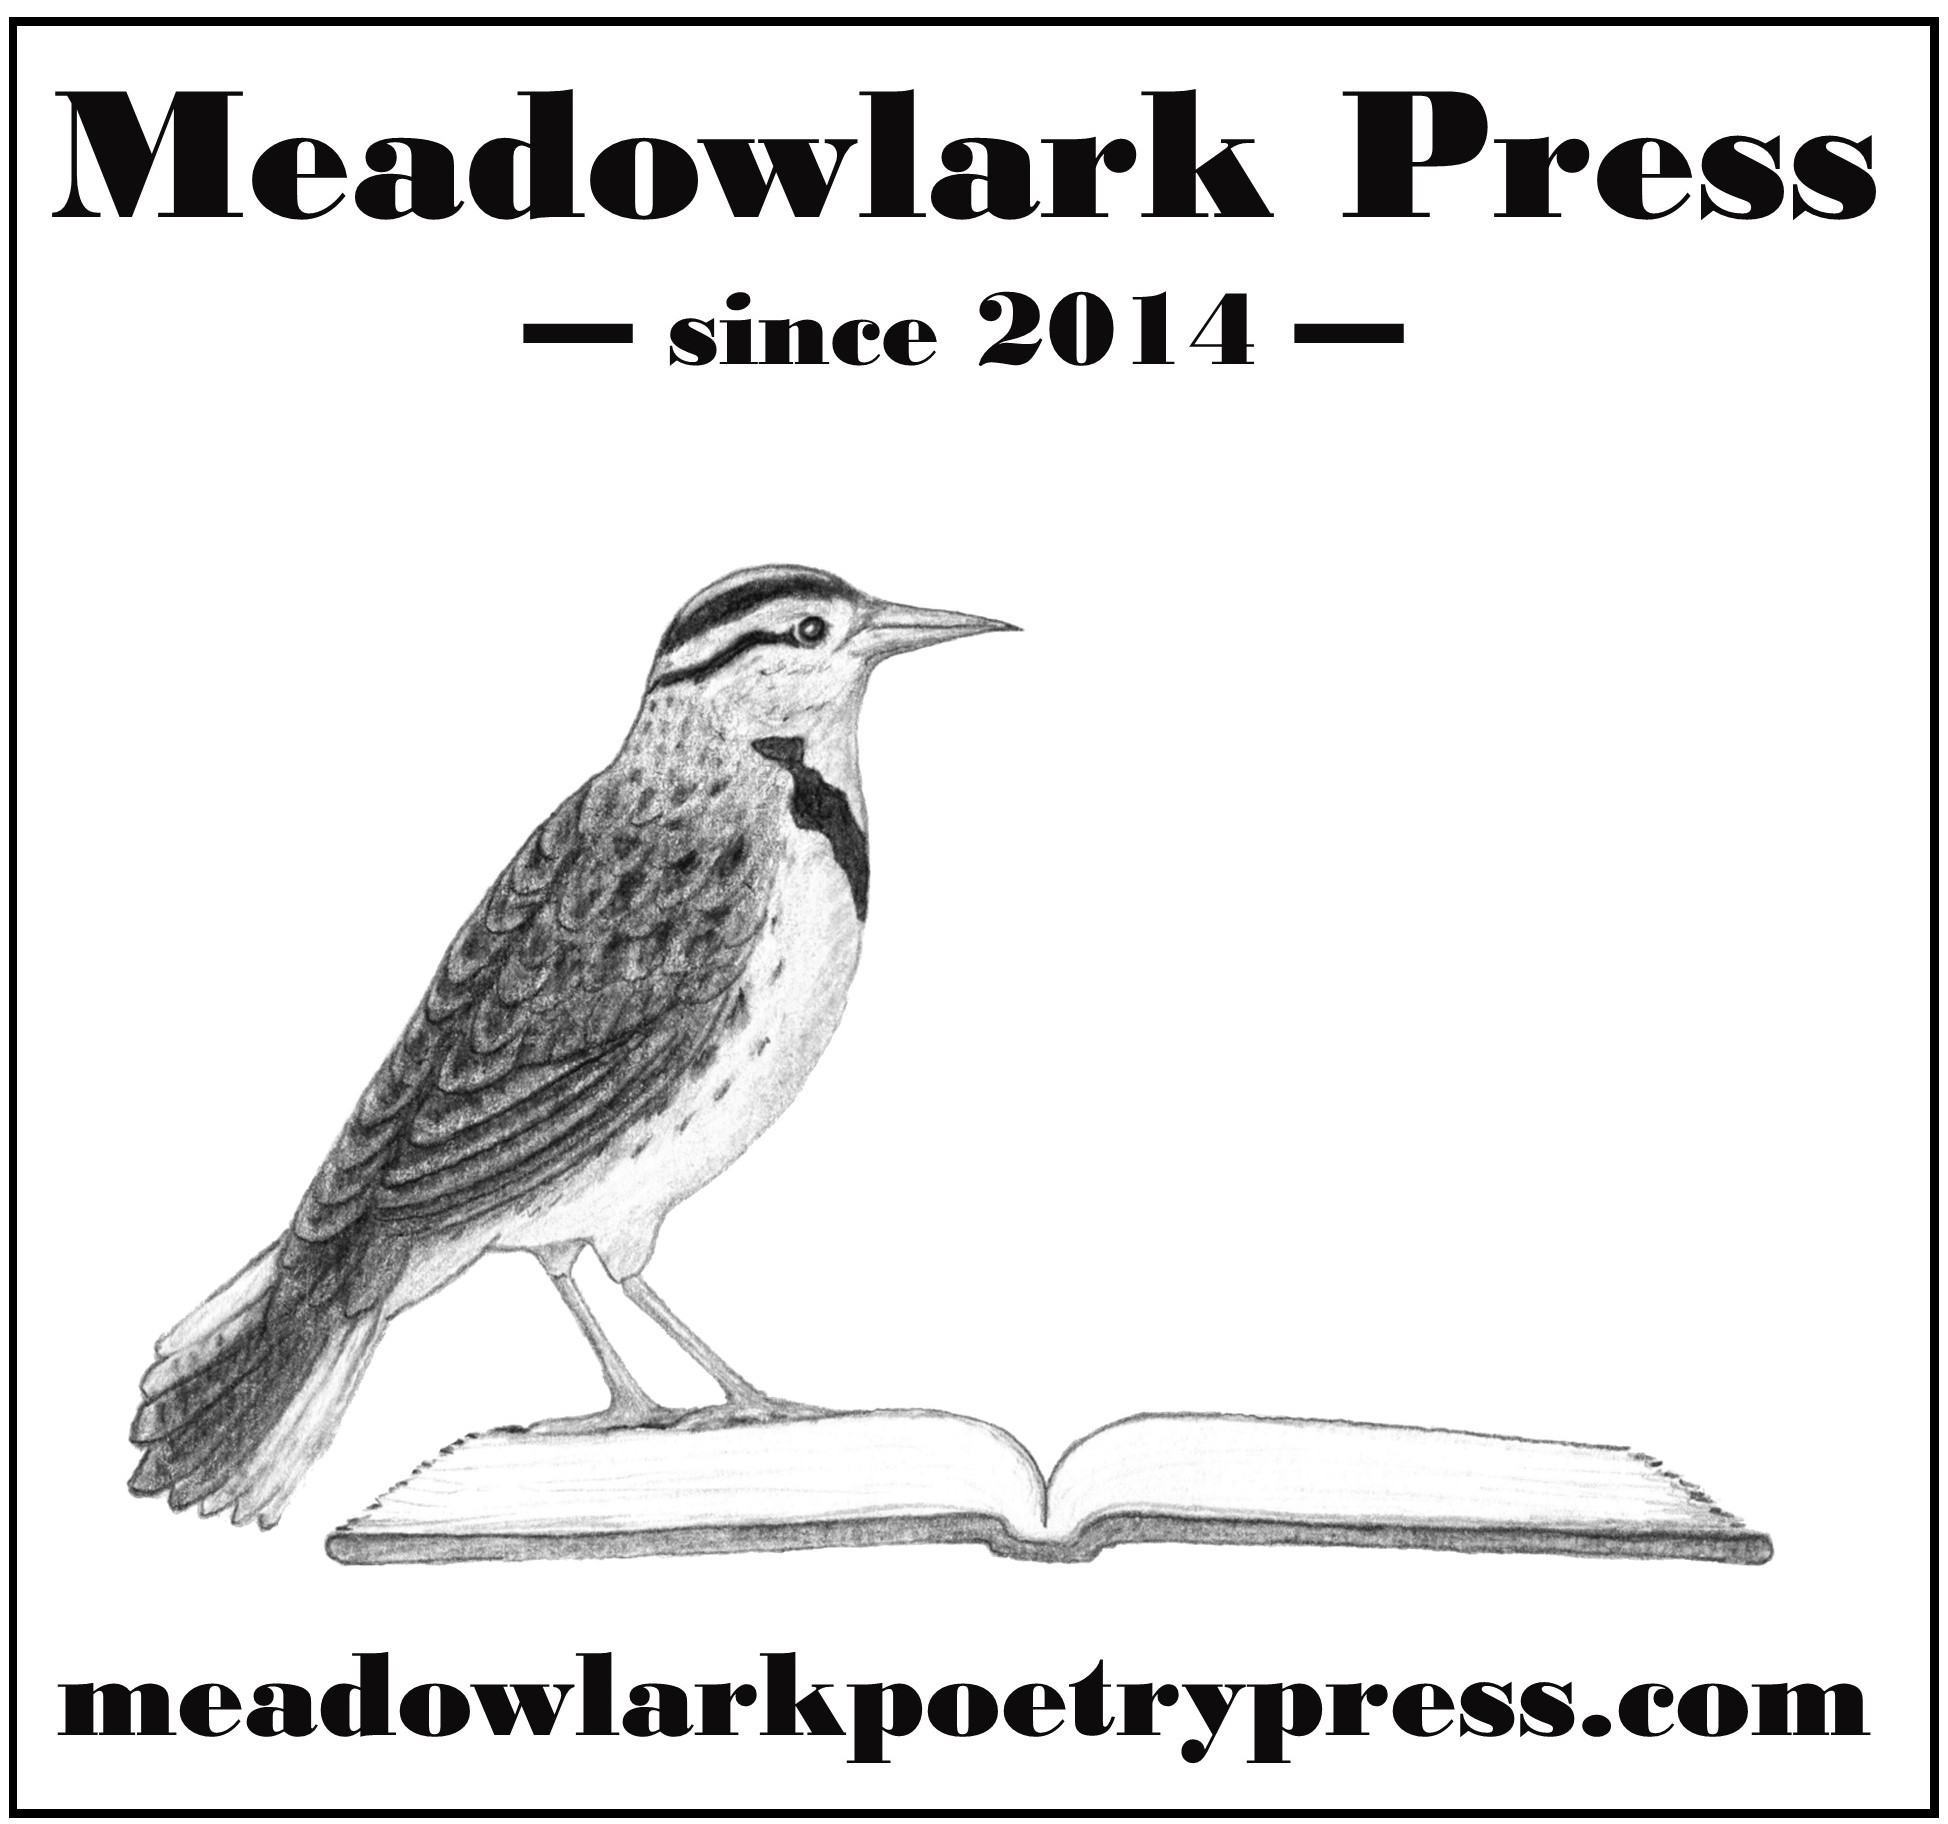 Meadowlark Press Logo and Poetry Website